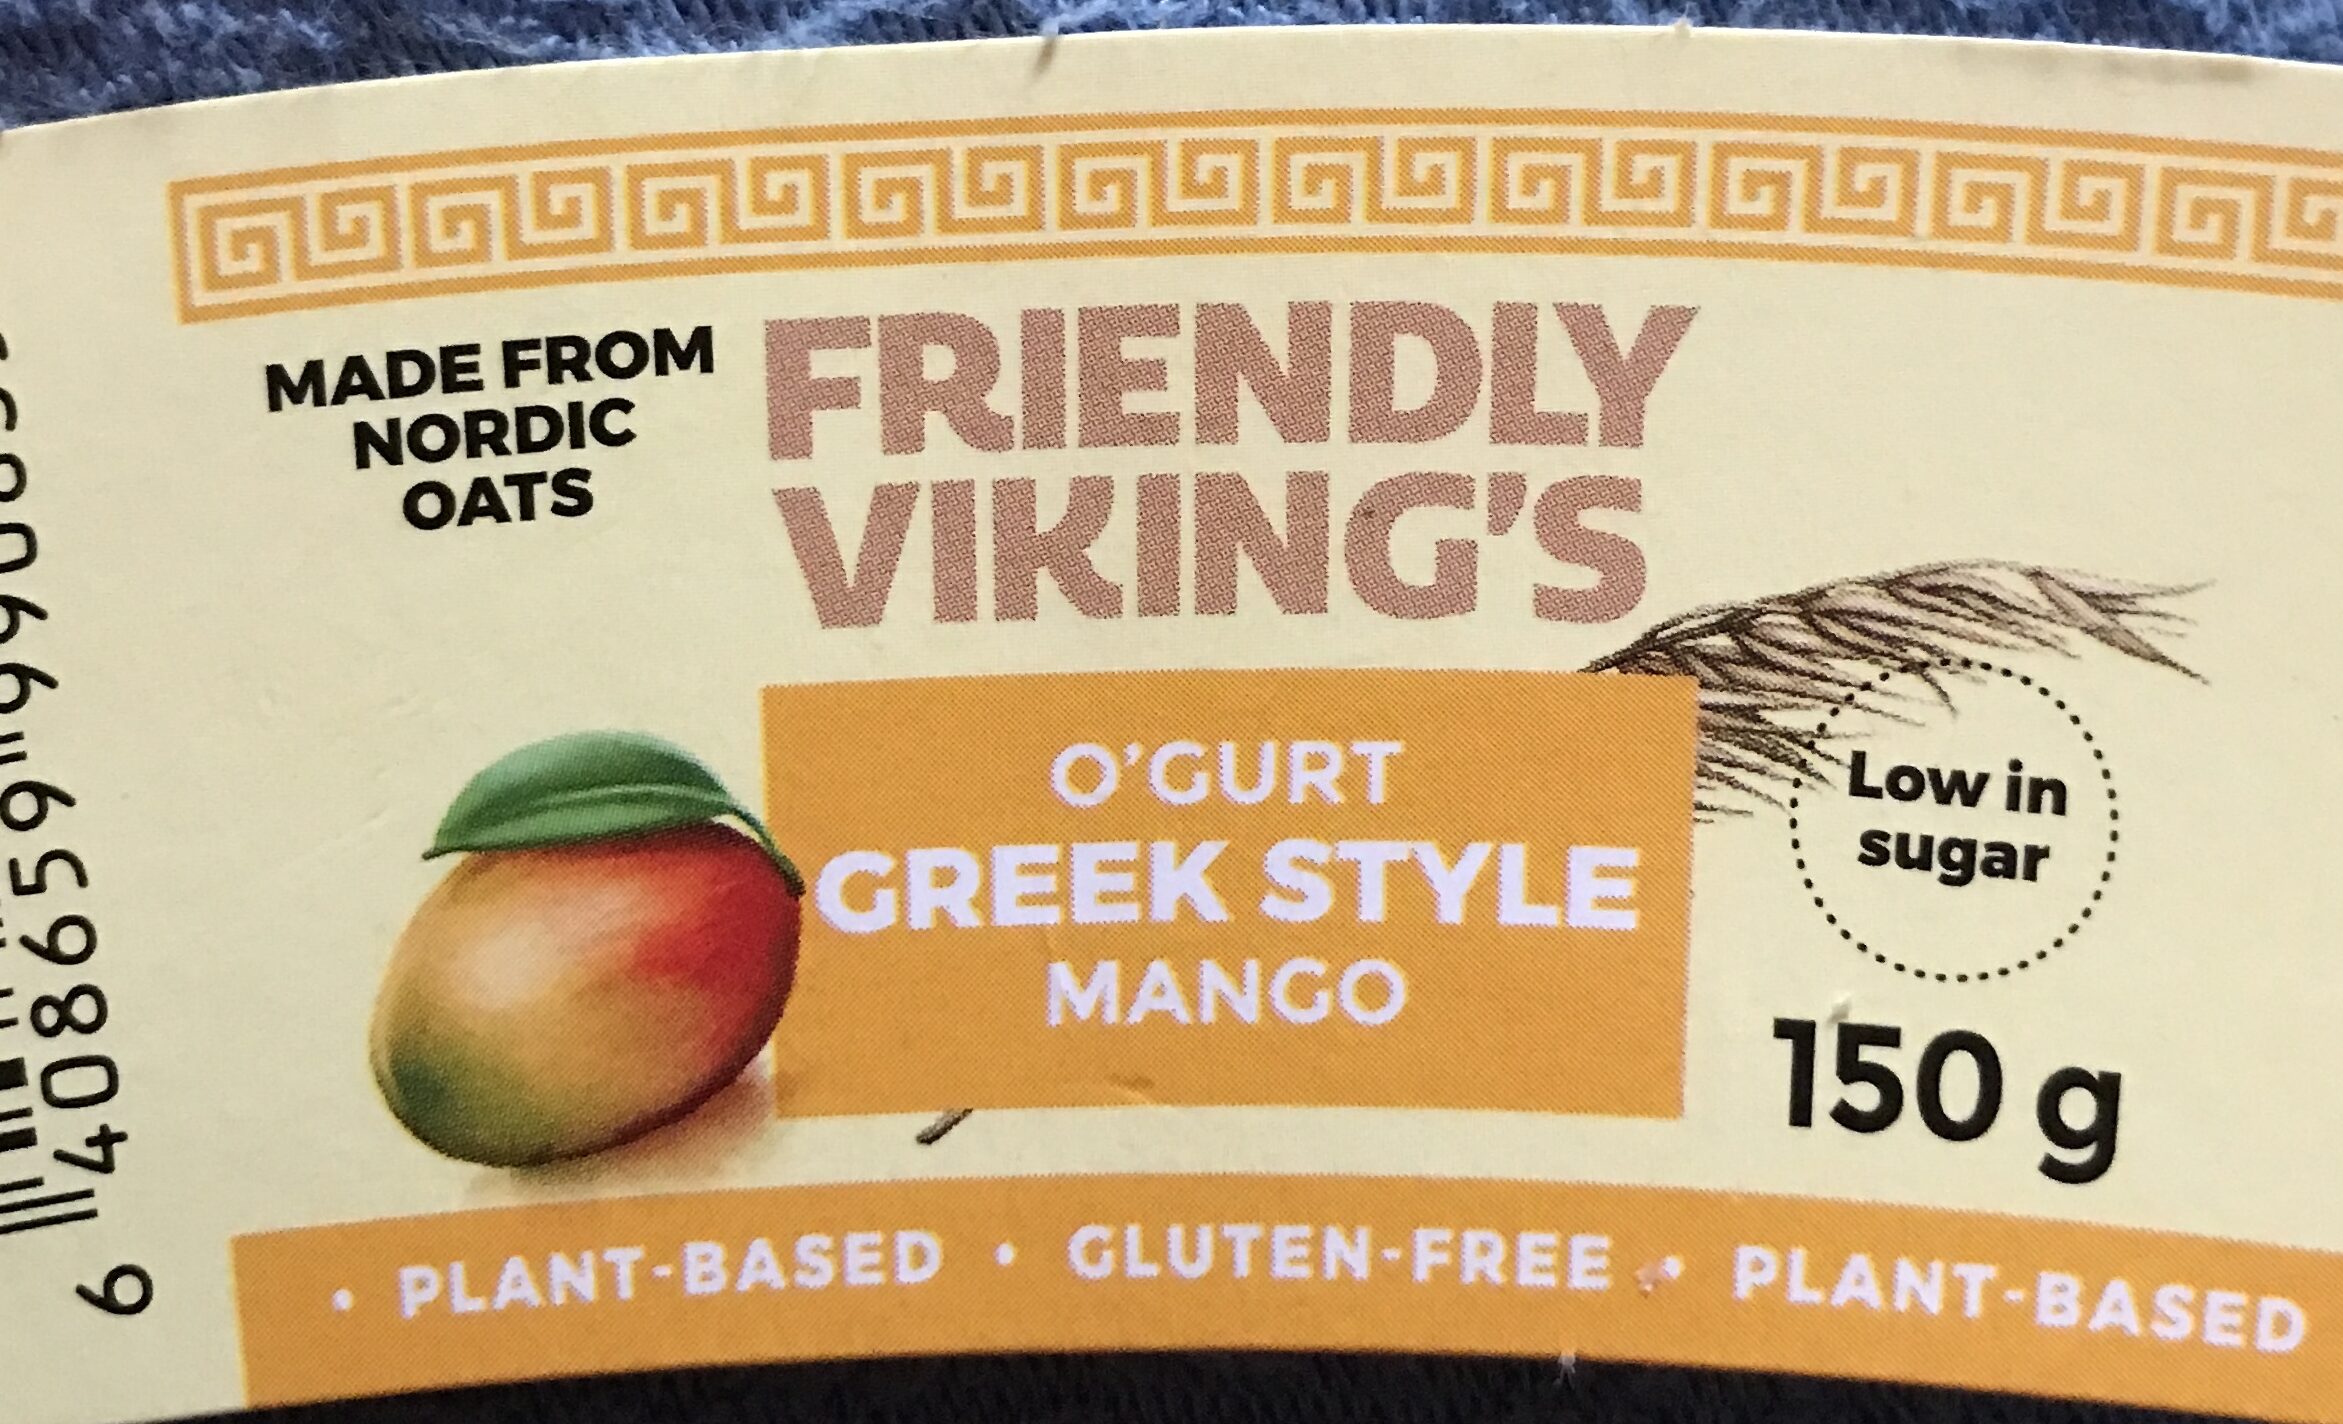 O'gurt greek style mango - Product - de